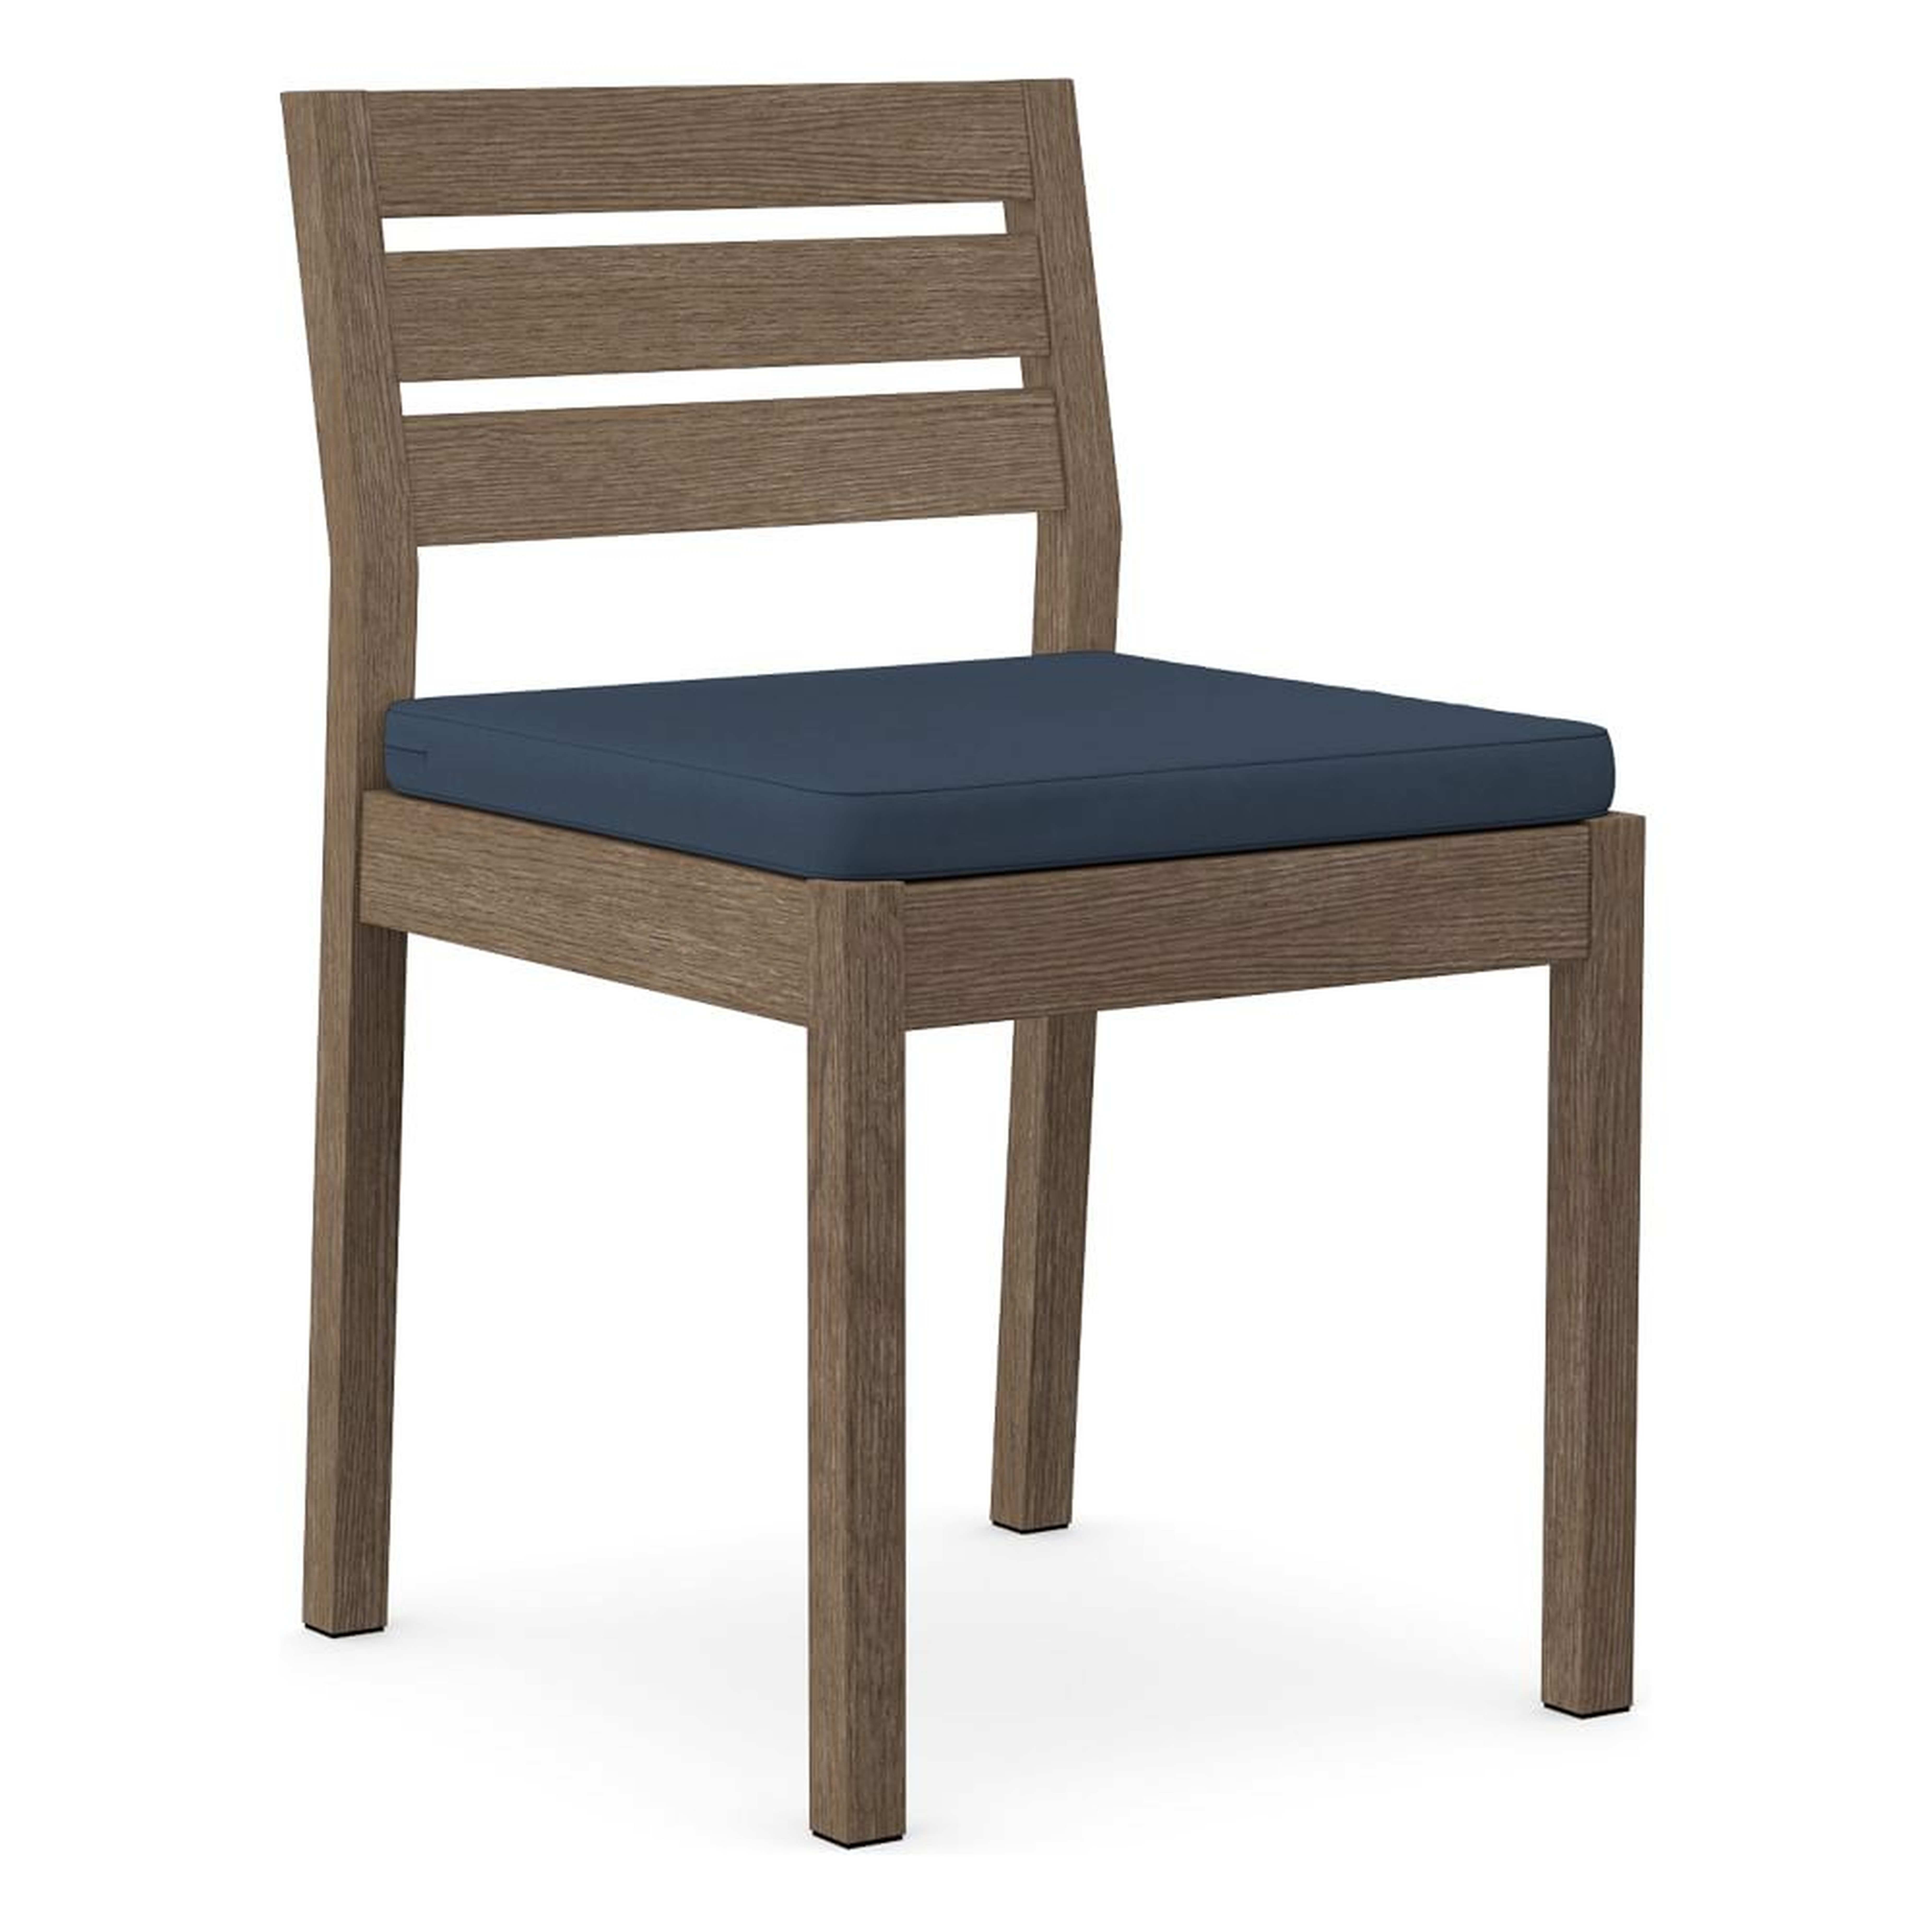 Portside Dining Chair Outdoor Cushion Covers, Sunbrella(R) Canvas, Sapphire Blue - West Elm